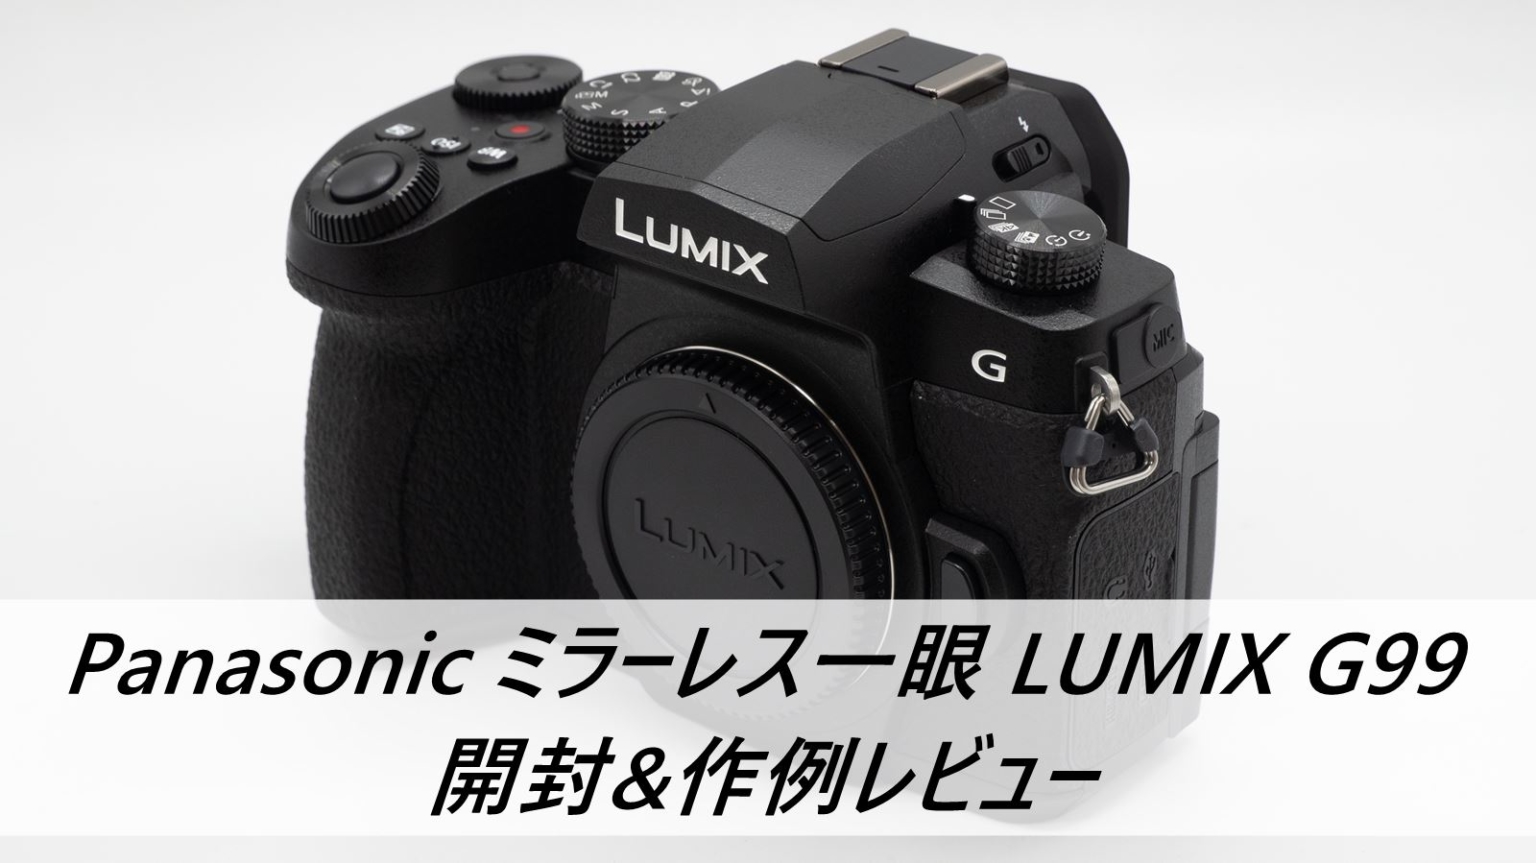 LUMIX G99 レビュー マイクロフォーサーズの優秀さが際立つ一台 | PHOTOBIKE